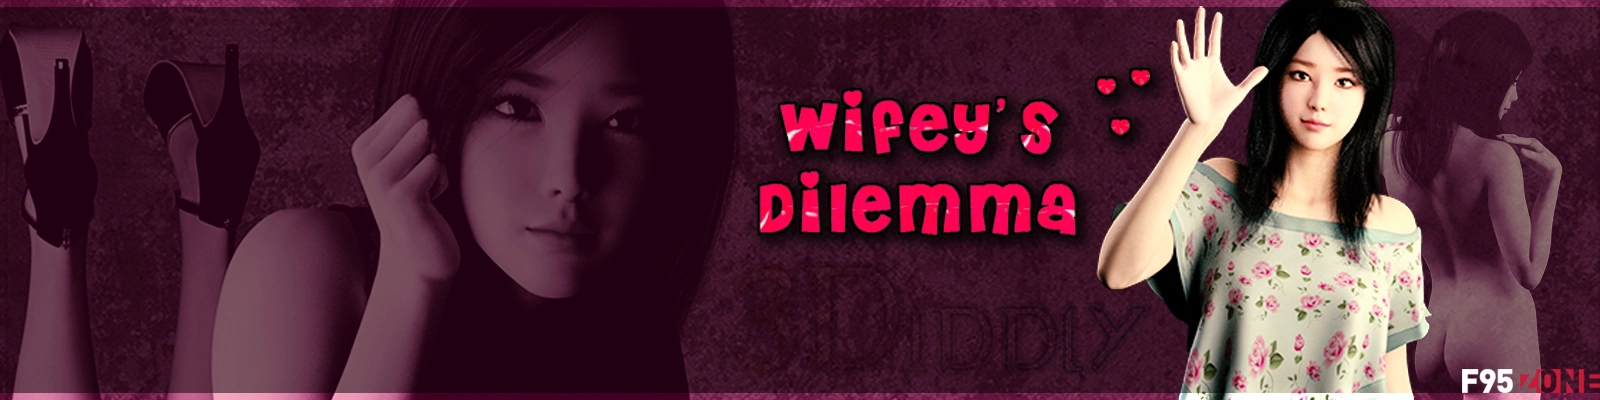 Wifey's Dilemma [v0.13] main image